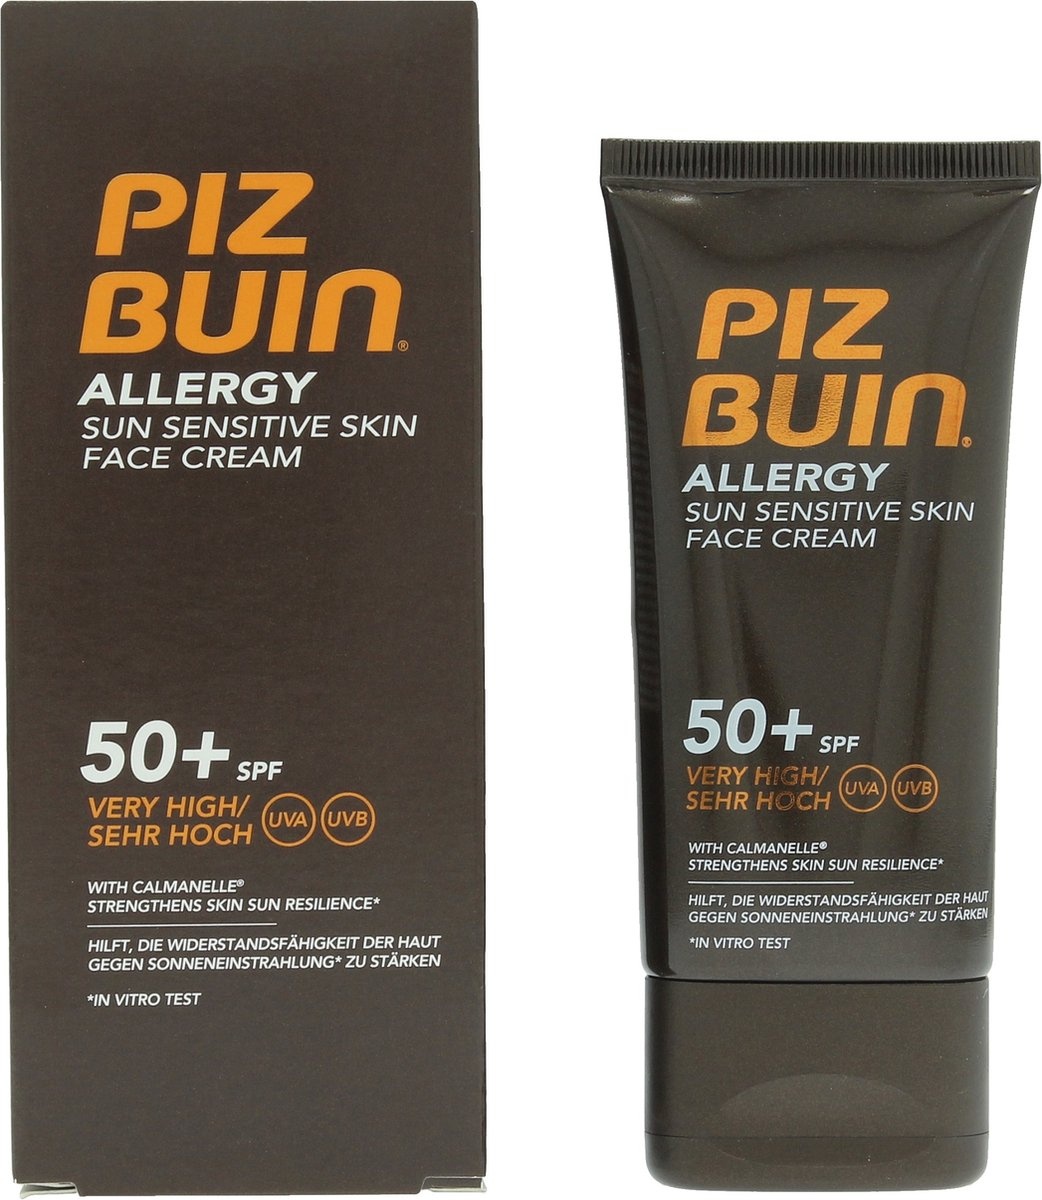 Piz Buin Allergy Sun Sensitive Skin Face Cream SPF50 - 50ml - Packaging damaged